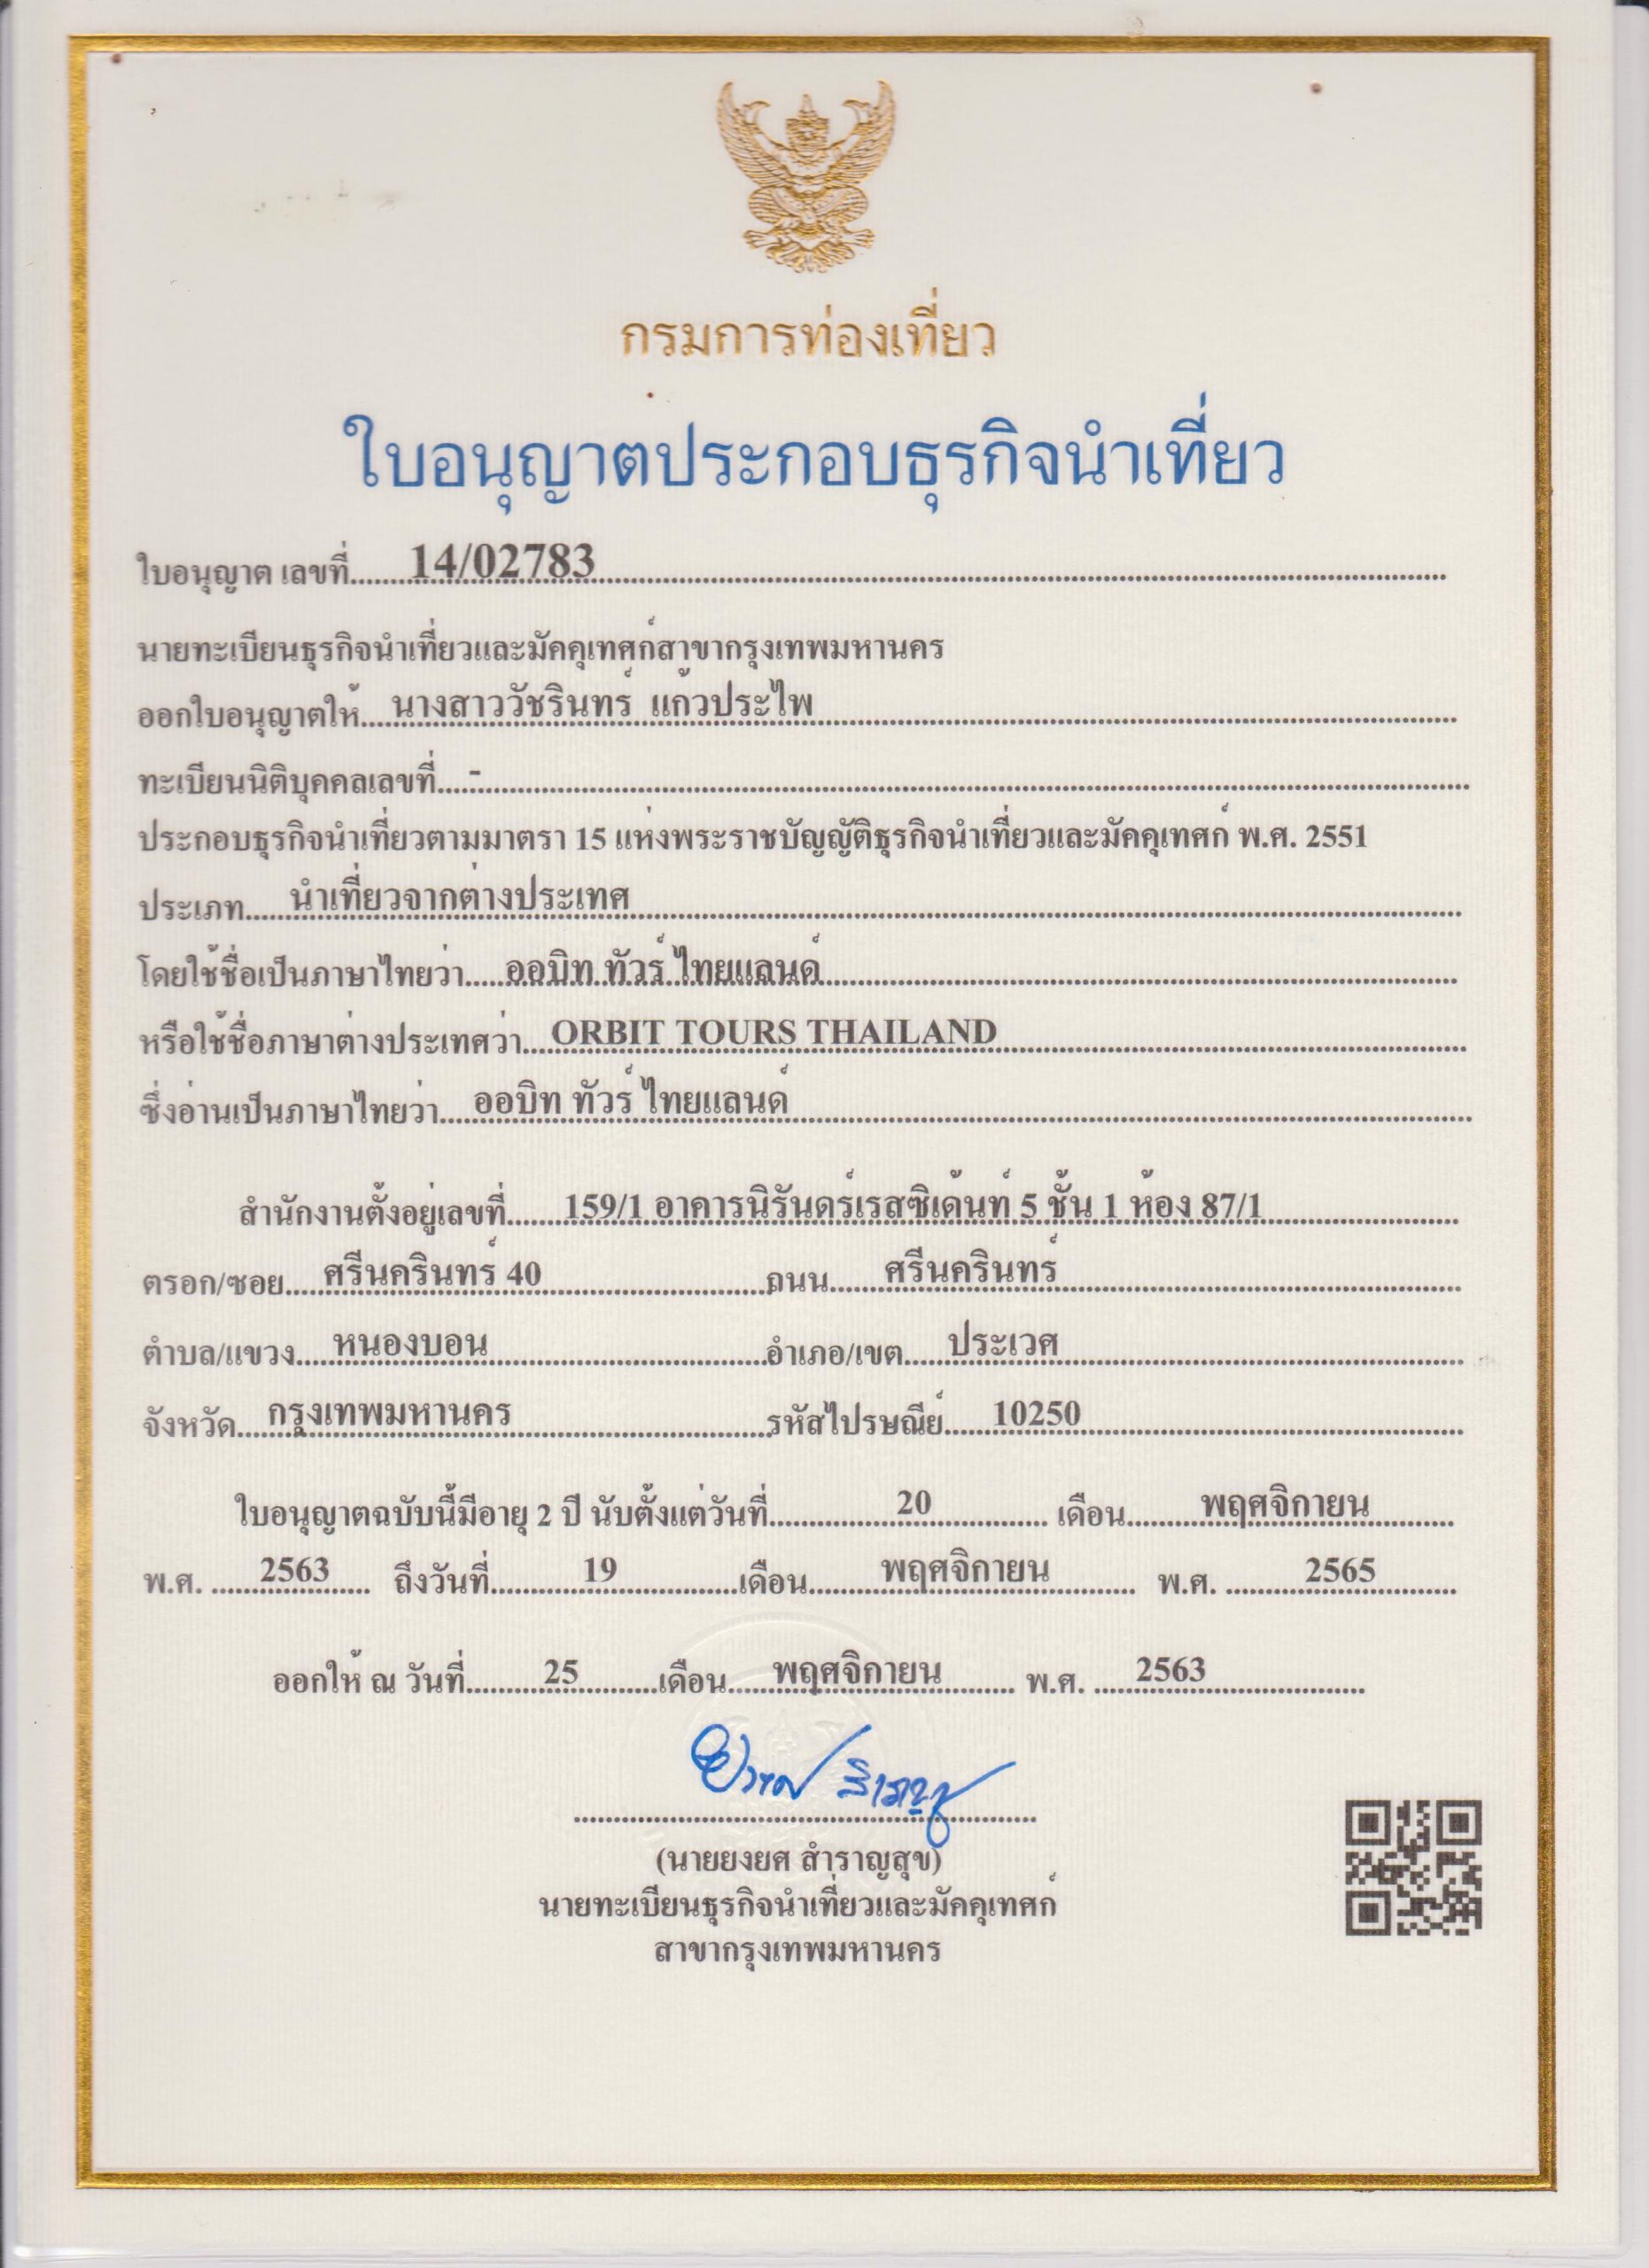 tour guide license thailand